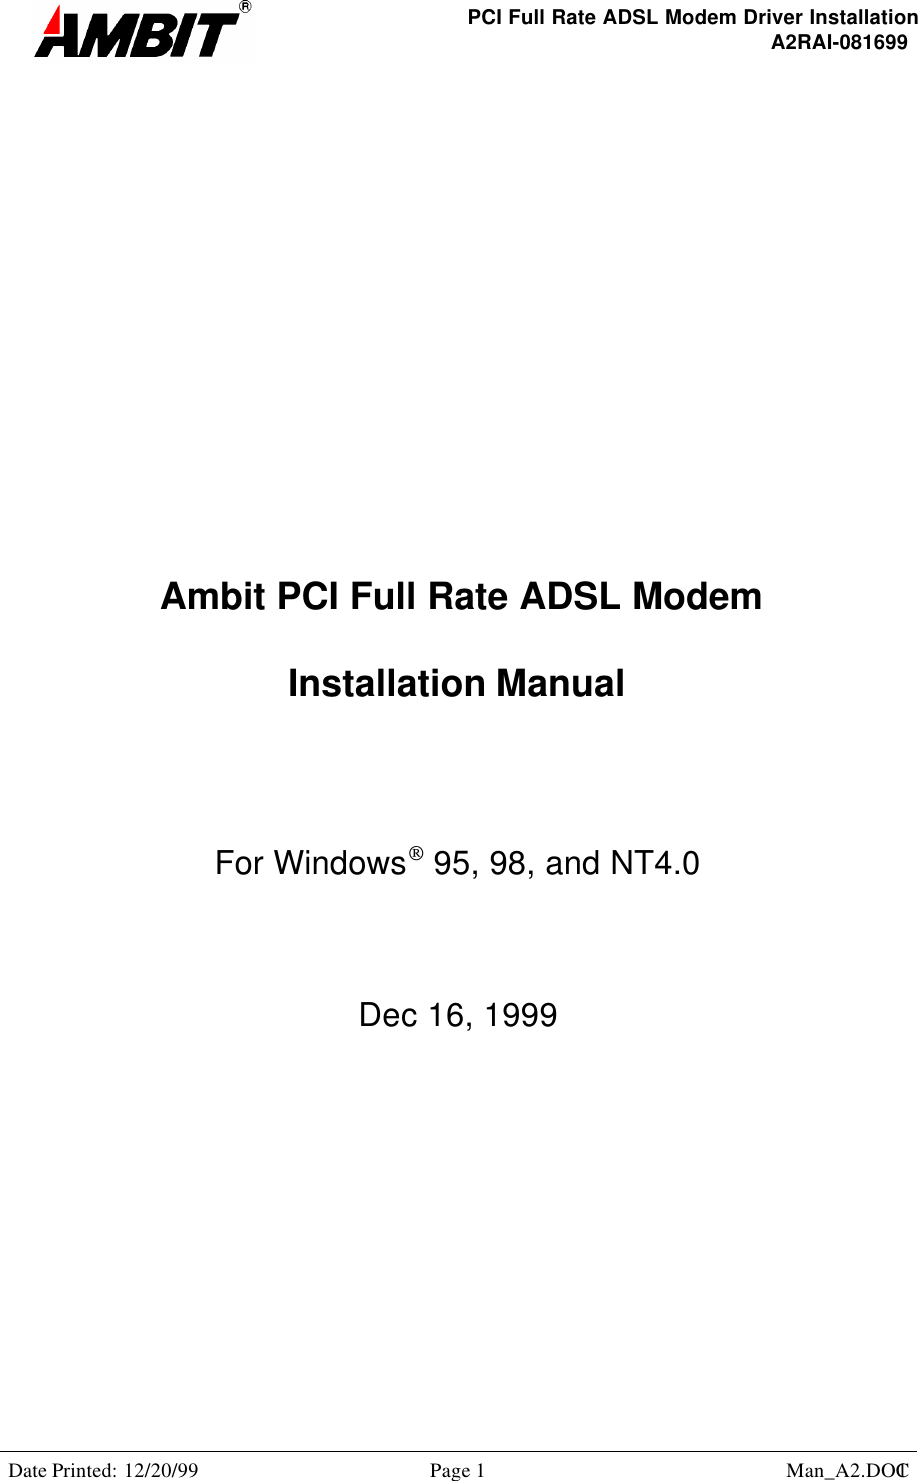 PCI Full Rate ADSL Modem Driver InstallationA2RAI-081699Date Printed: 12/20/99 Page 1 Man_A2.DOC1 Ambit PCI Full Rate ADSL ModemInstallation ManualFor Windows 95, 98, and NT4.0Dec 16, 1999